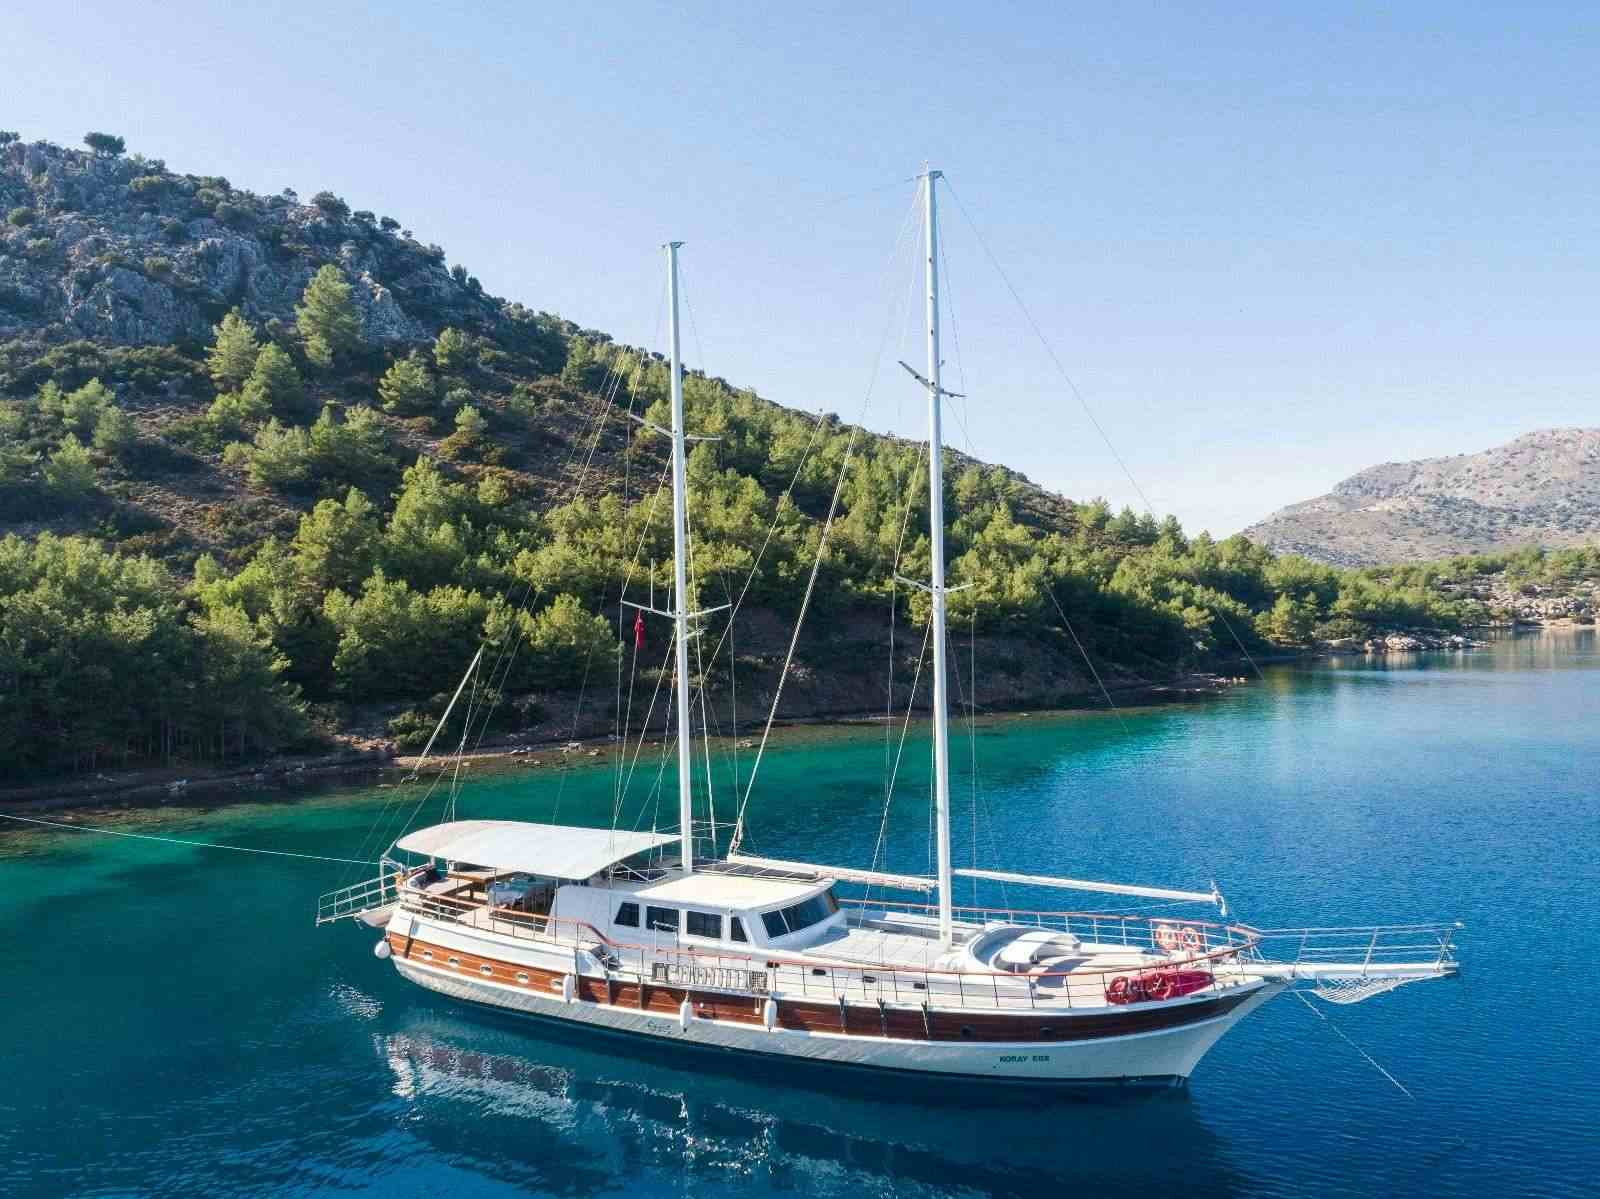 koray ege - Yacht Charter Grand Union Canal & Boat hire in Greece & Turkey 1